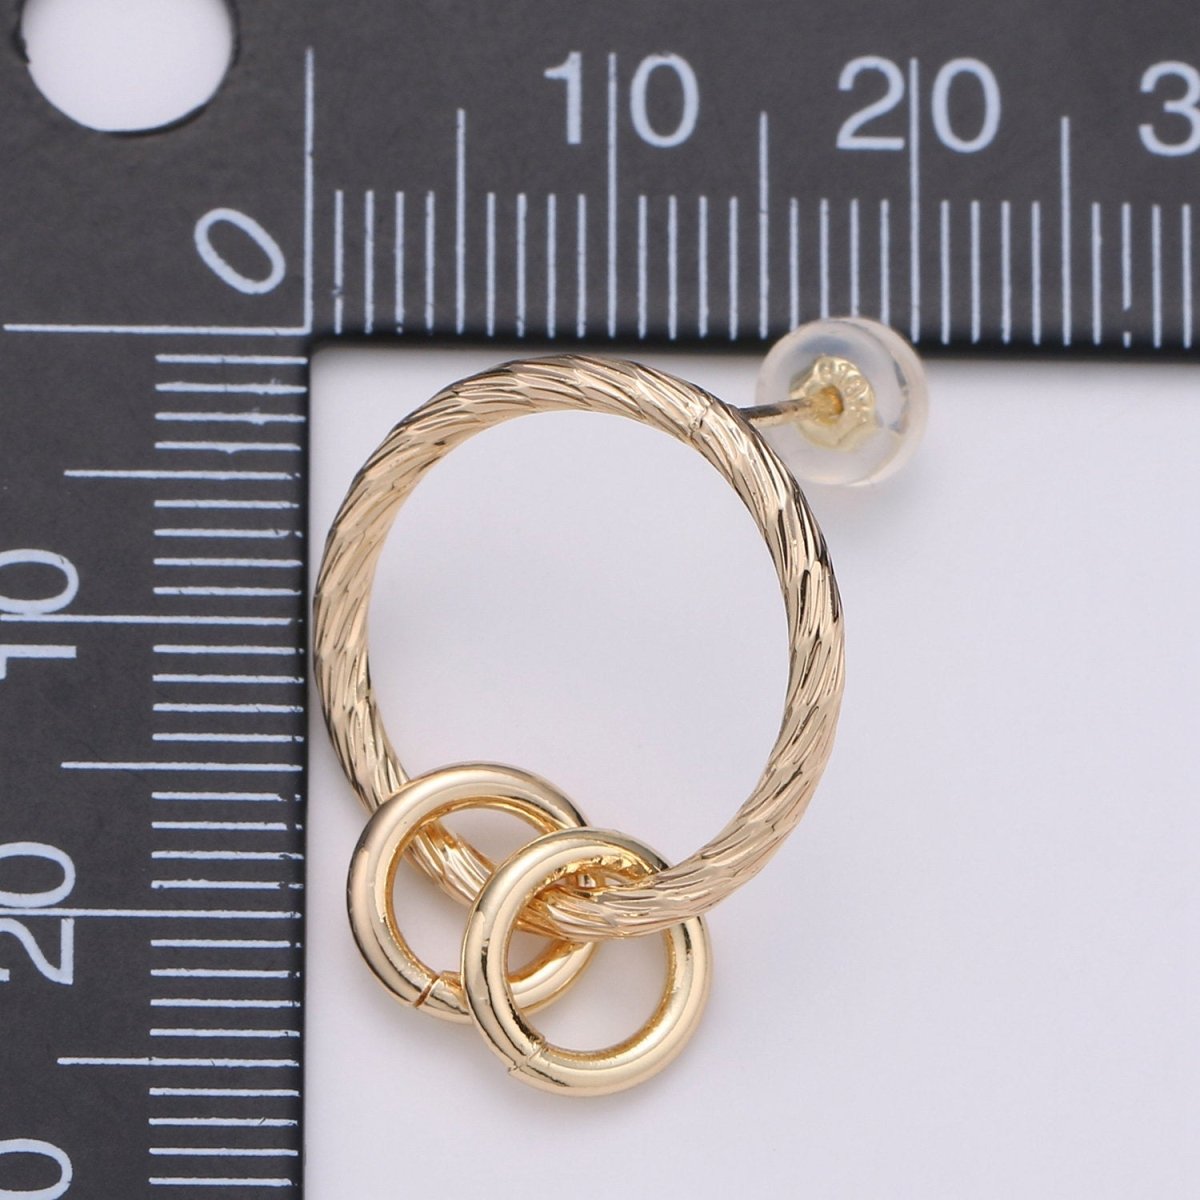 Dainty Gold Hoop Earrings, Gold Disk Earrings, Tiny Hoops with Coin Charm, Geometric Earrings, Gold Huggie Earrings, Minimalist Hoops, Gift Q-244 - DLUXCA